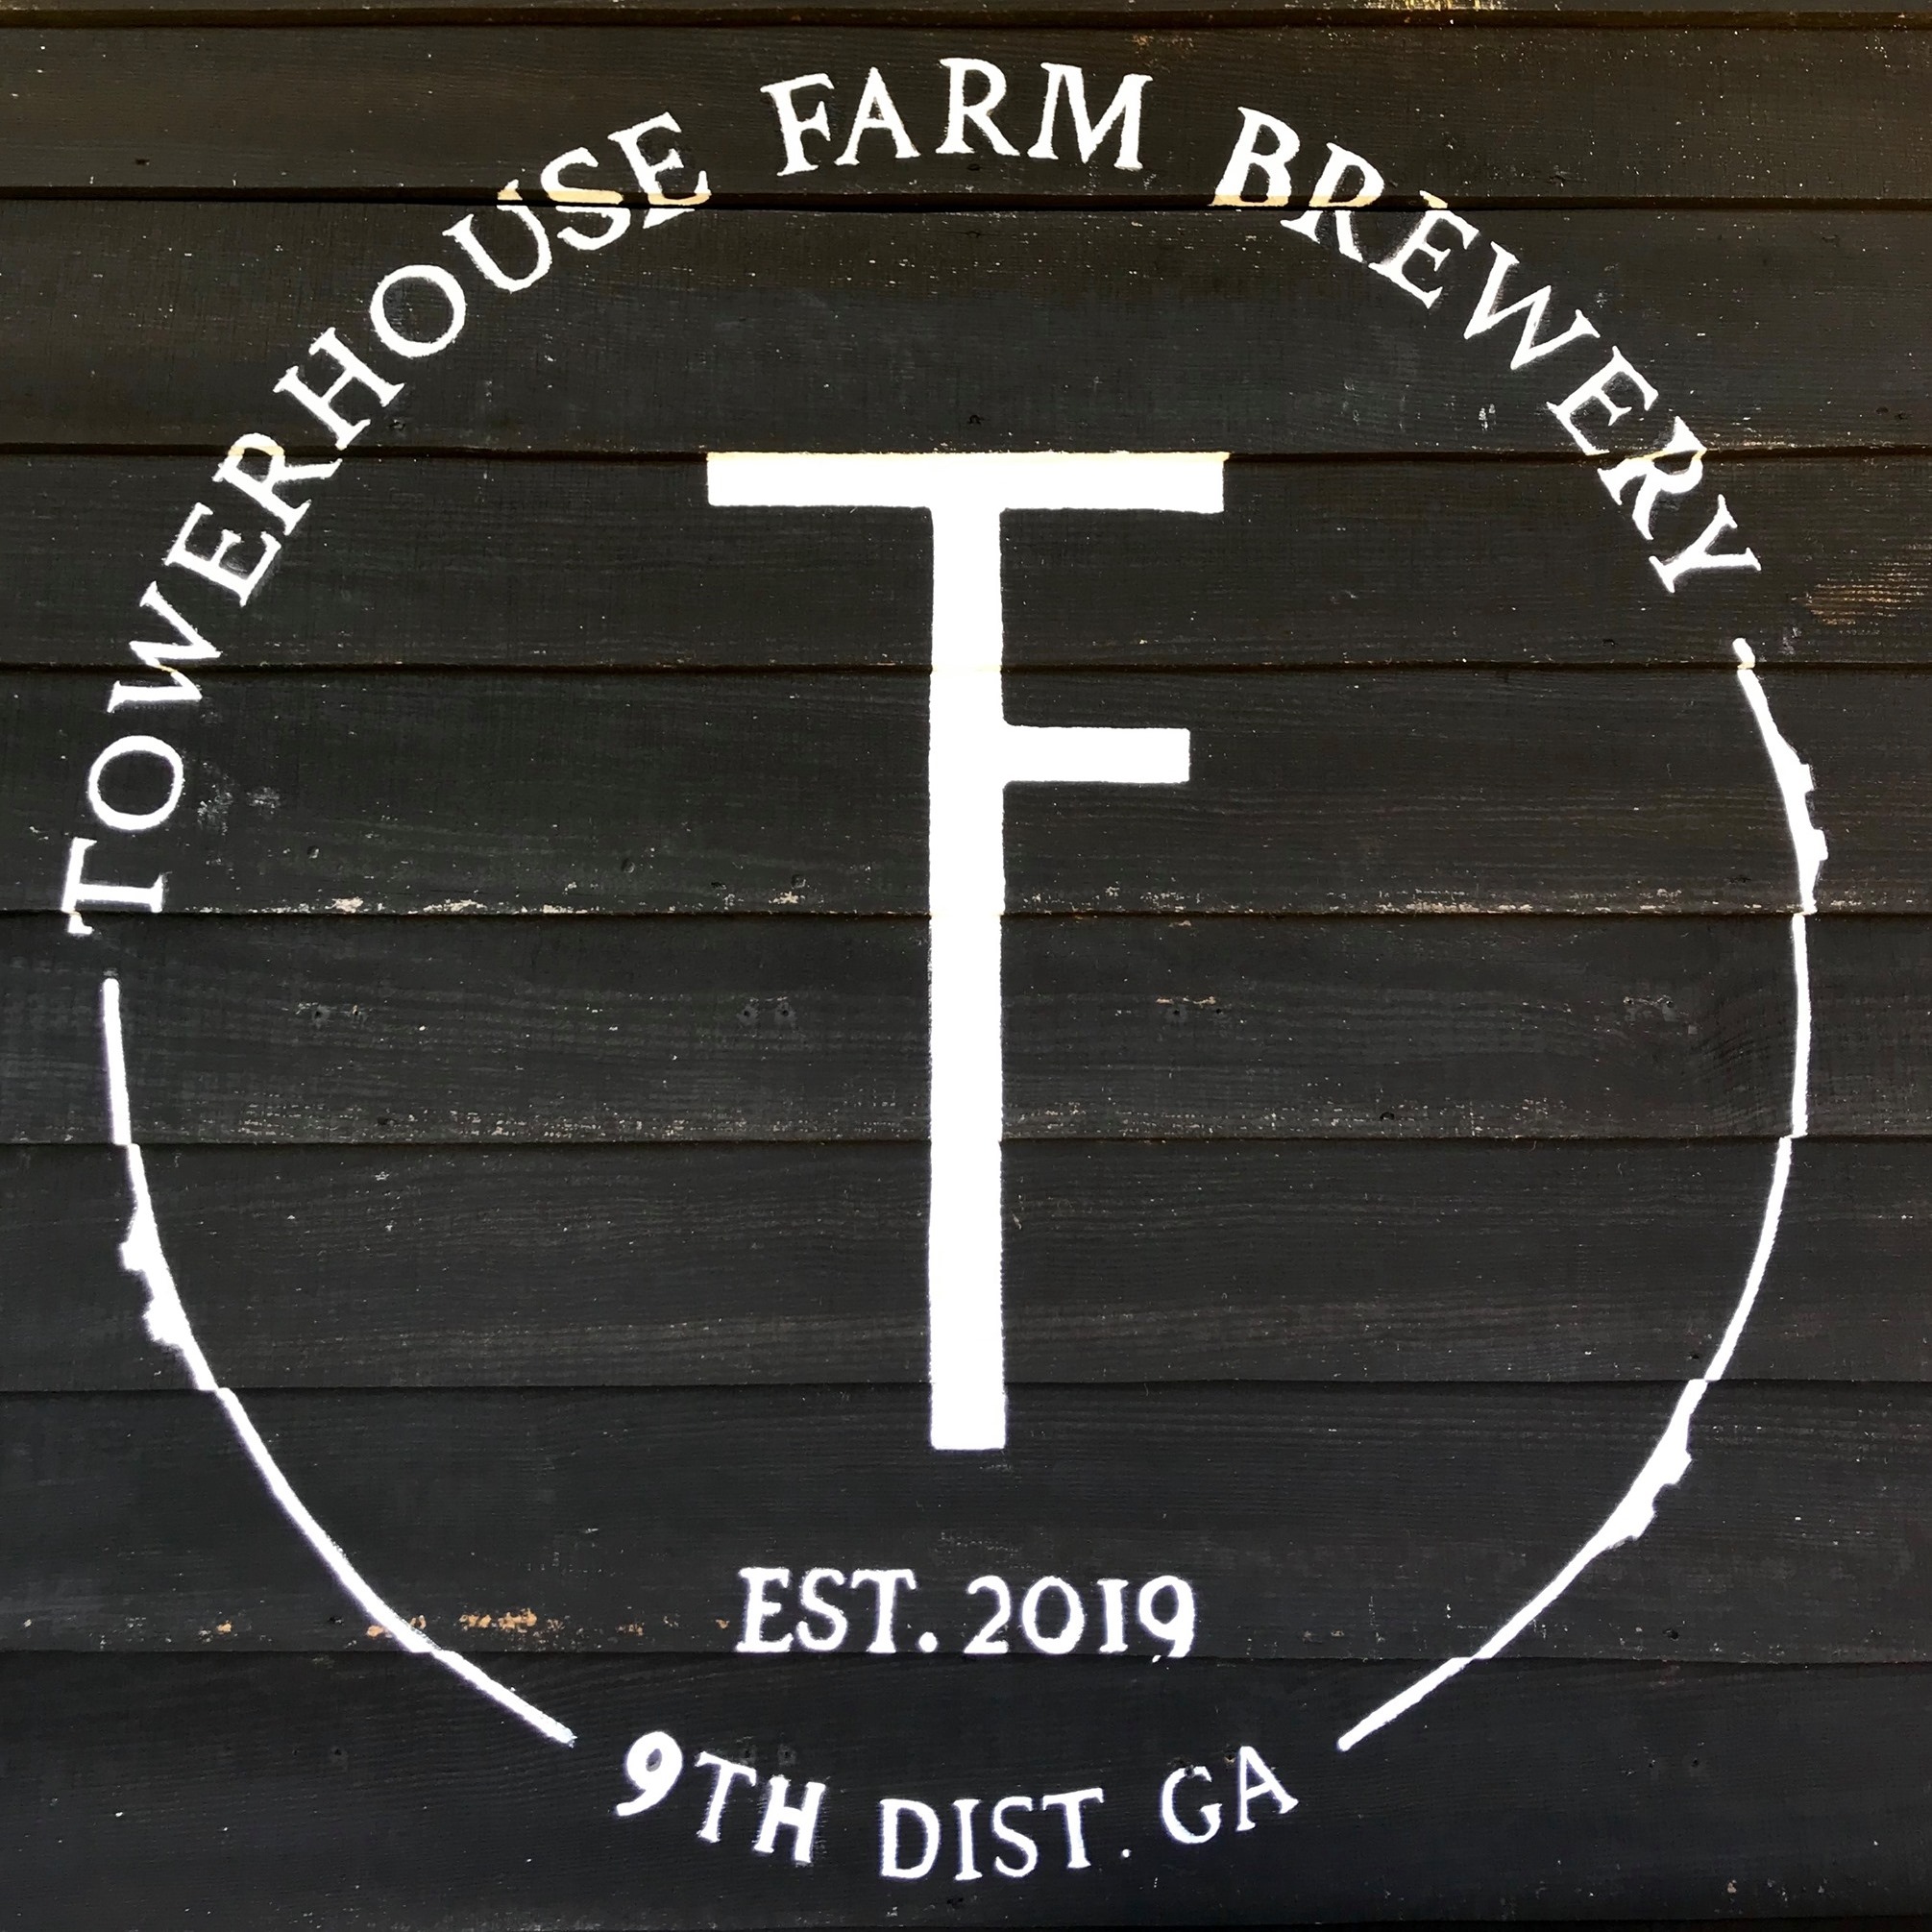 Towerhouse Farm Brewery logo